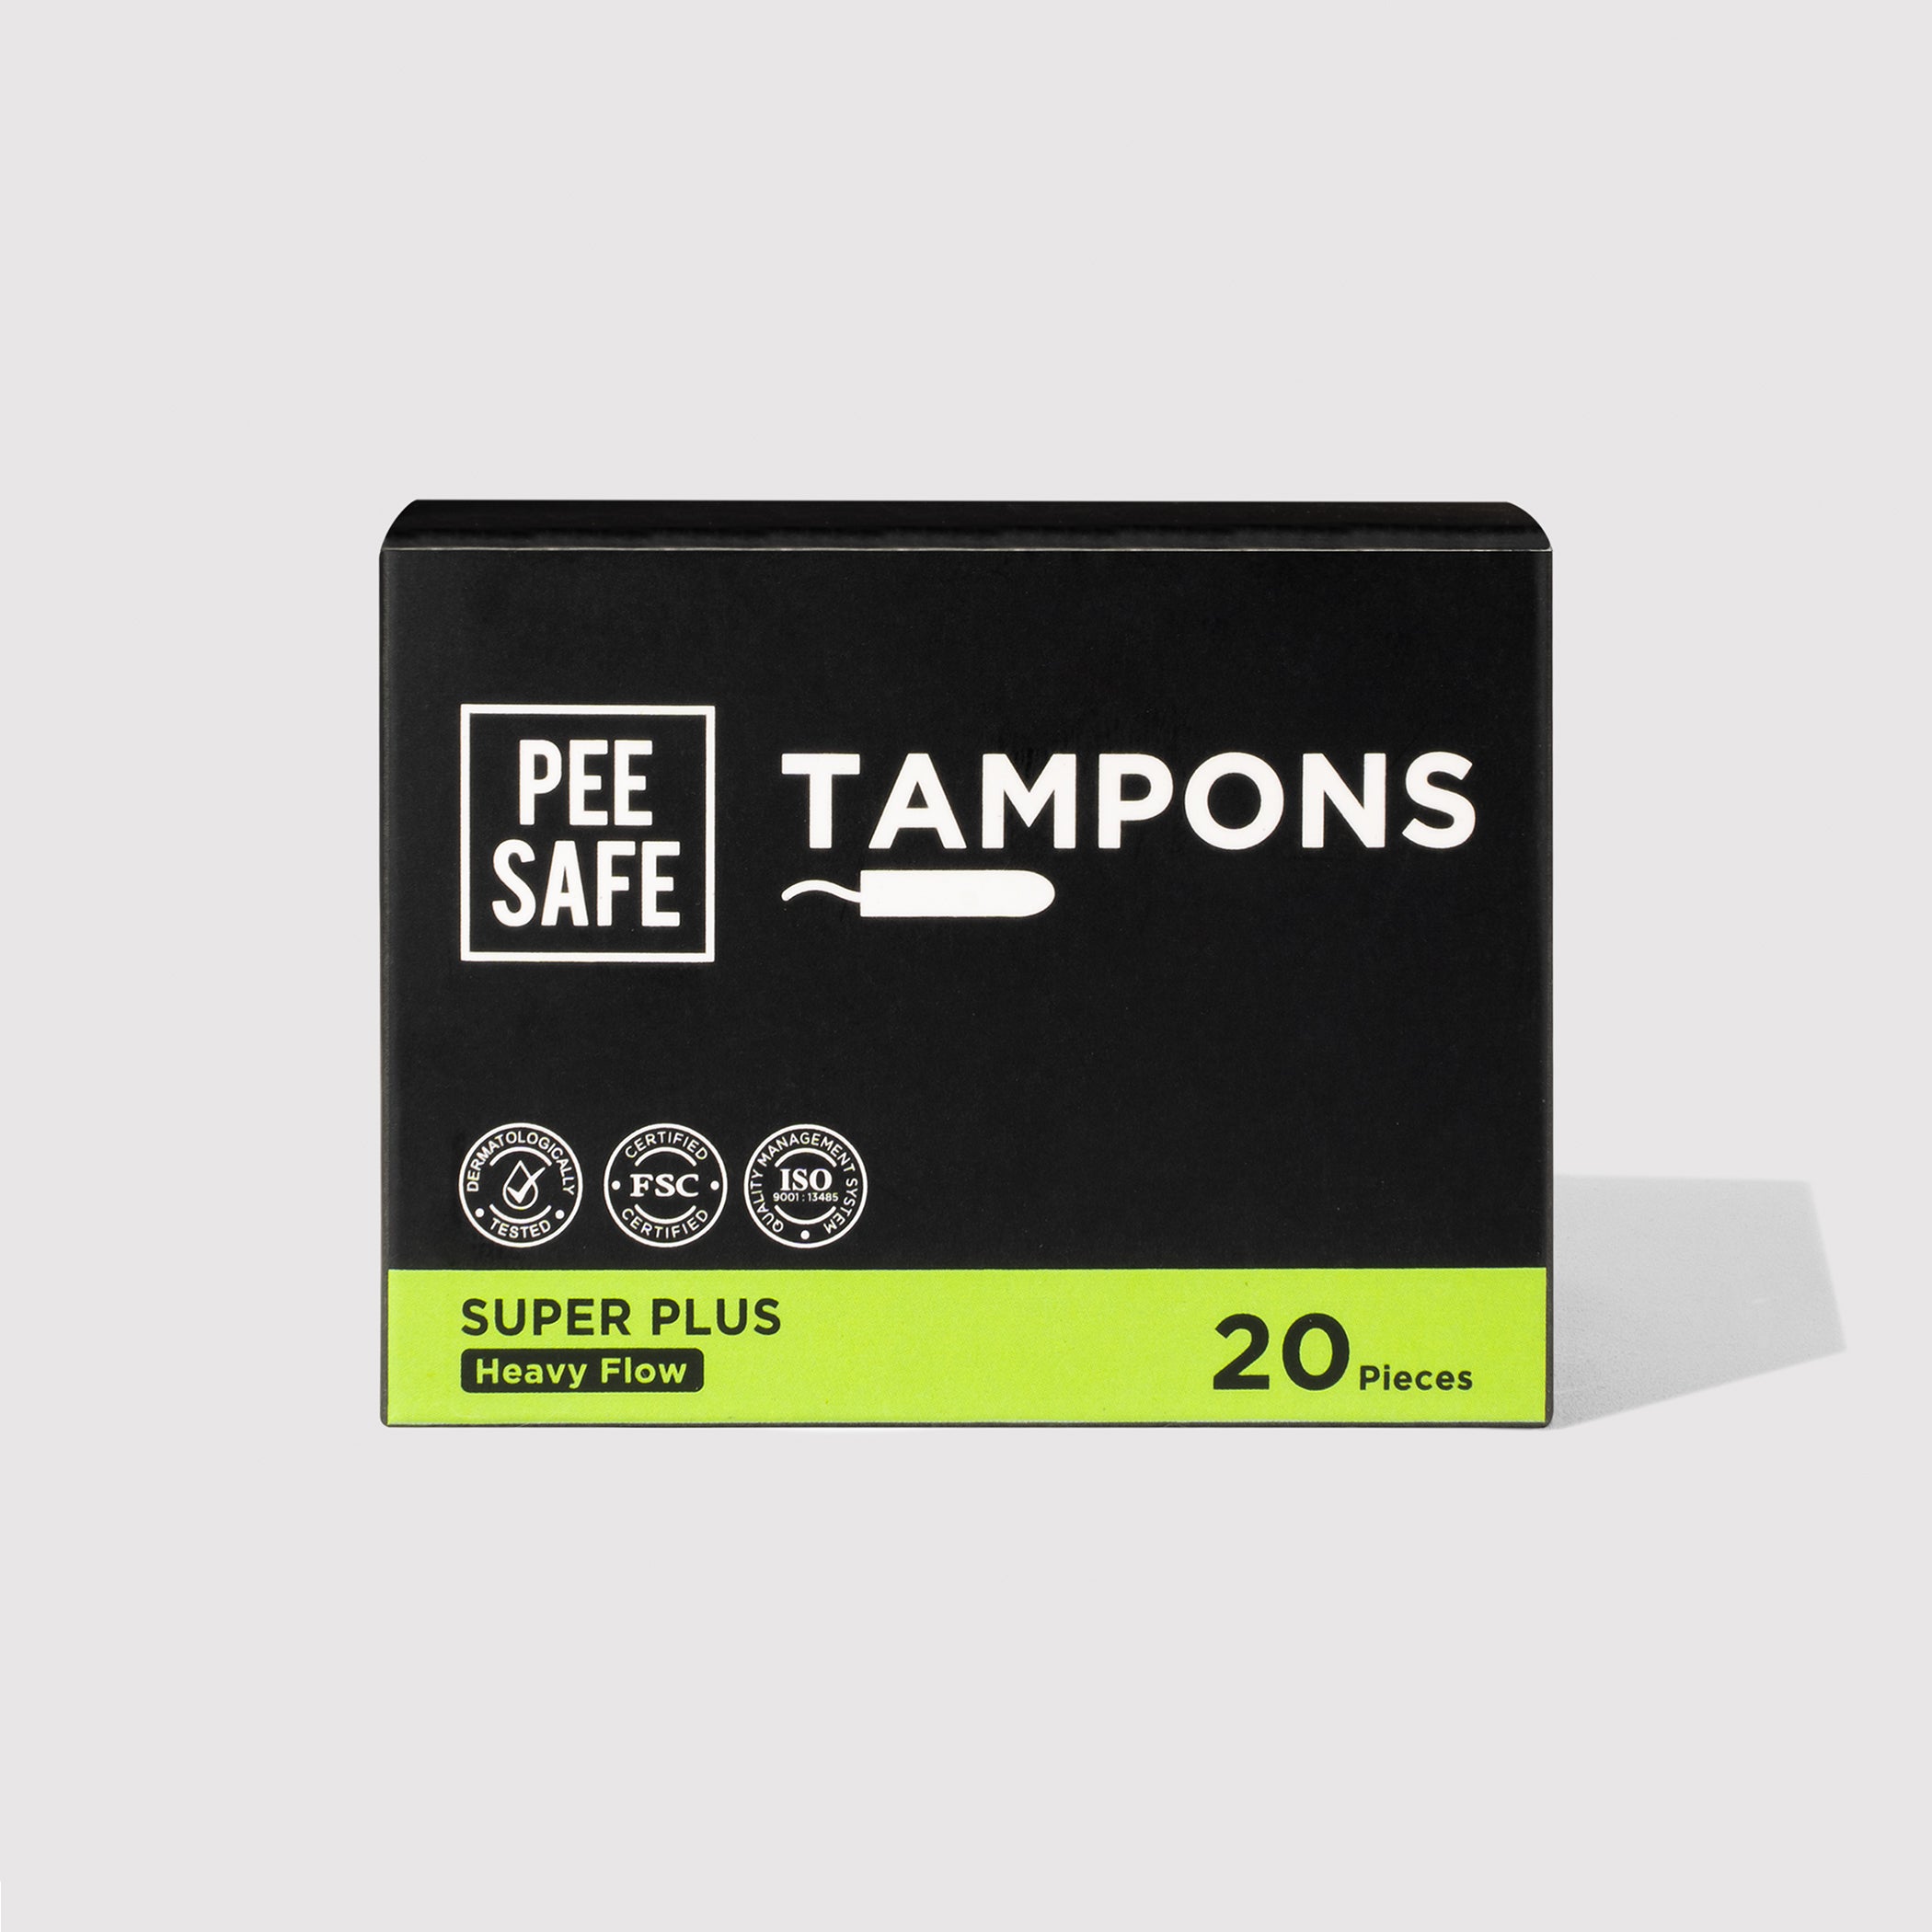 Pee Safe Tampons - Super Plus (20 Tampons)